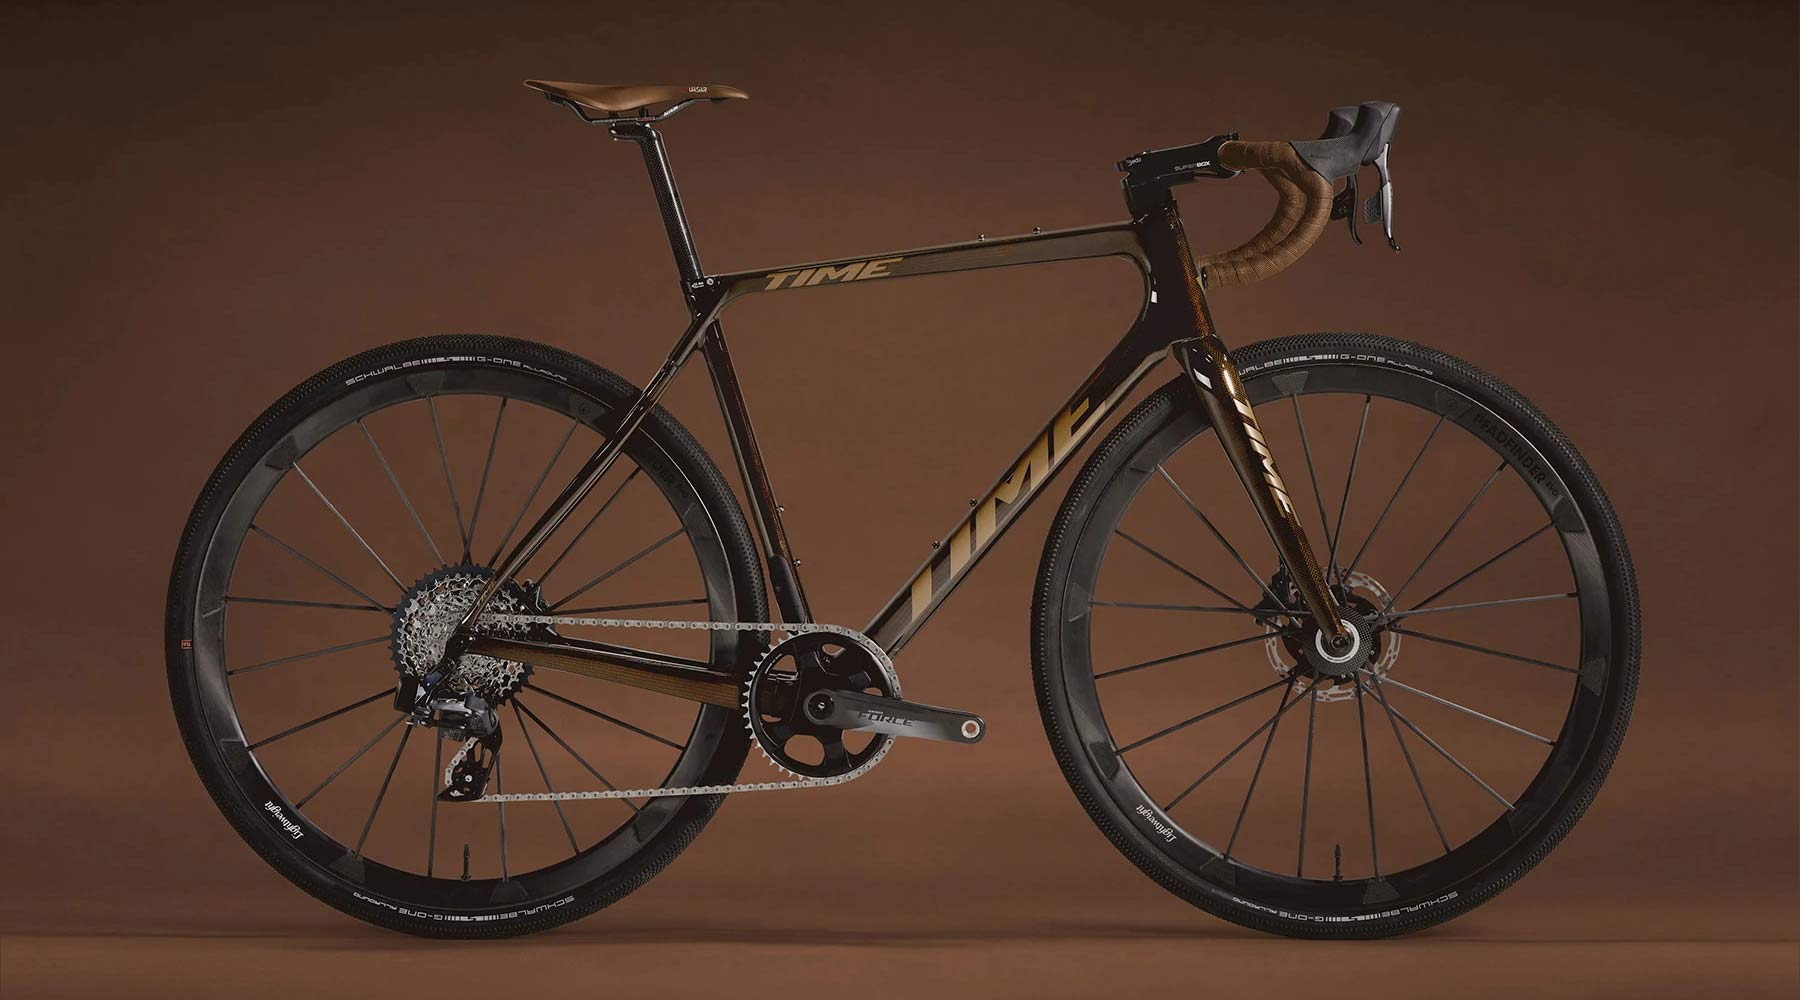 TIME ADHX bio-based-Dyneema carbon all-road gravel bike, amber complete